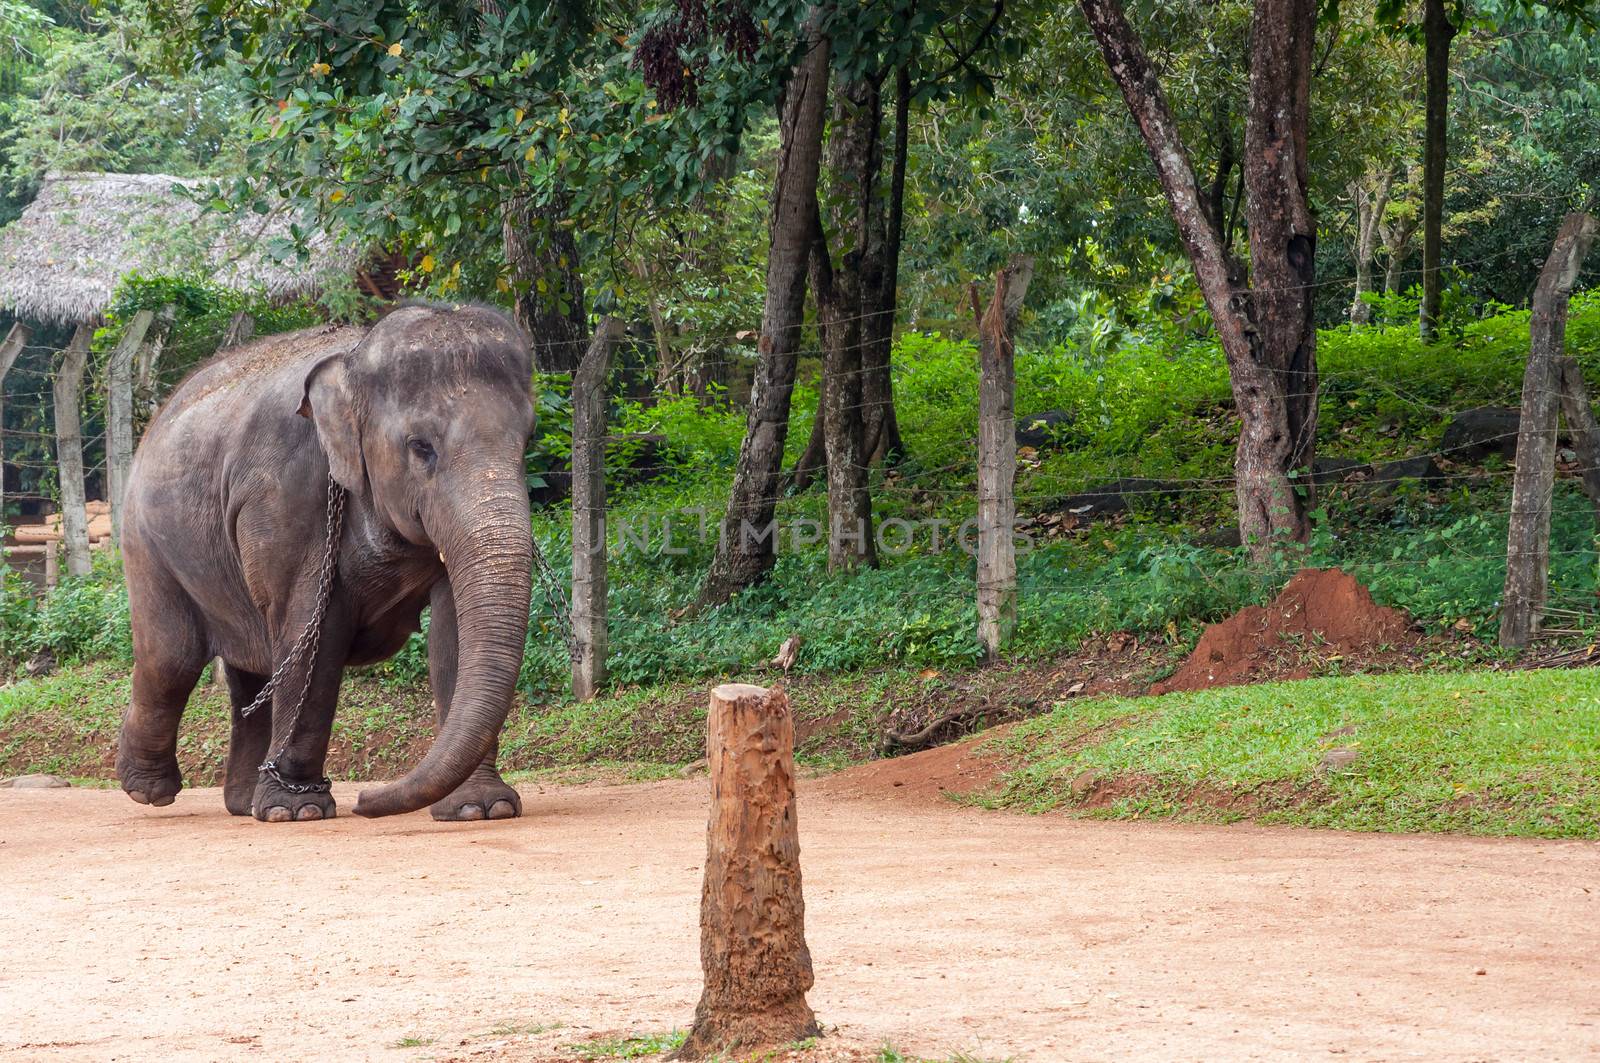 Elephant in chains, Pinnawela Elephant Orphanage, Sri Lanka